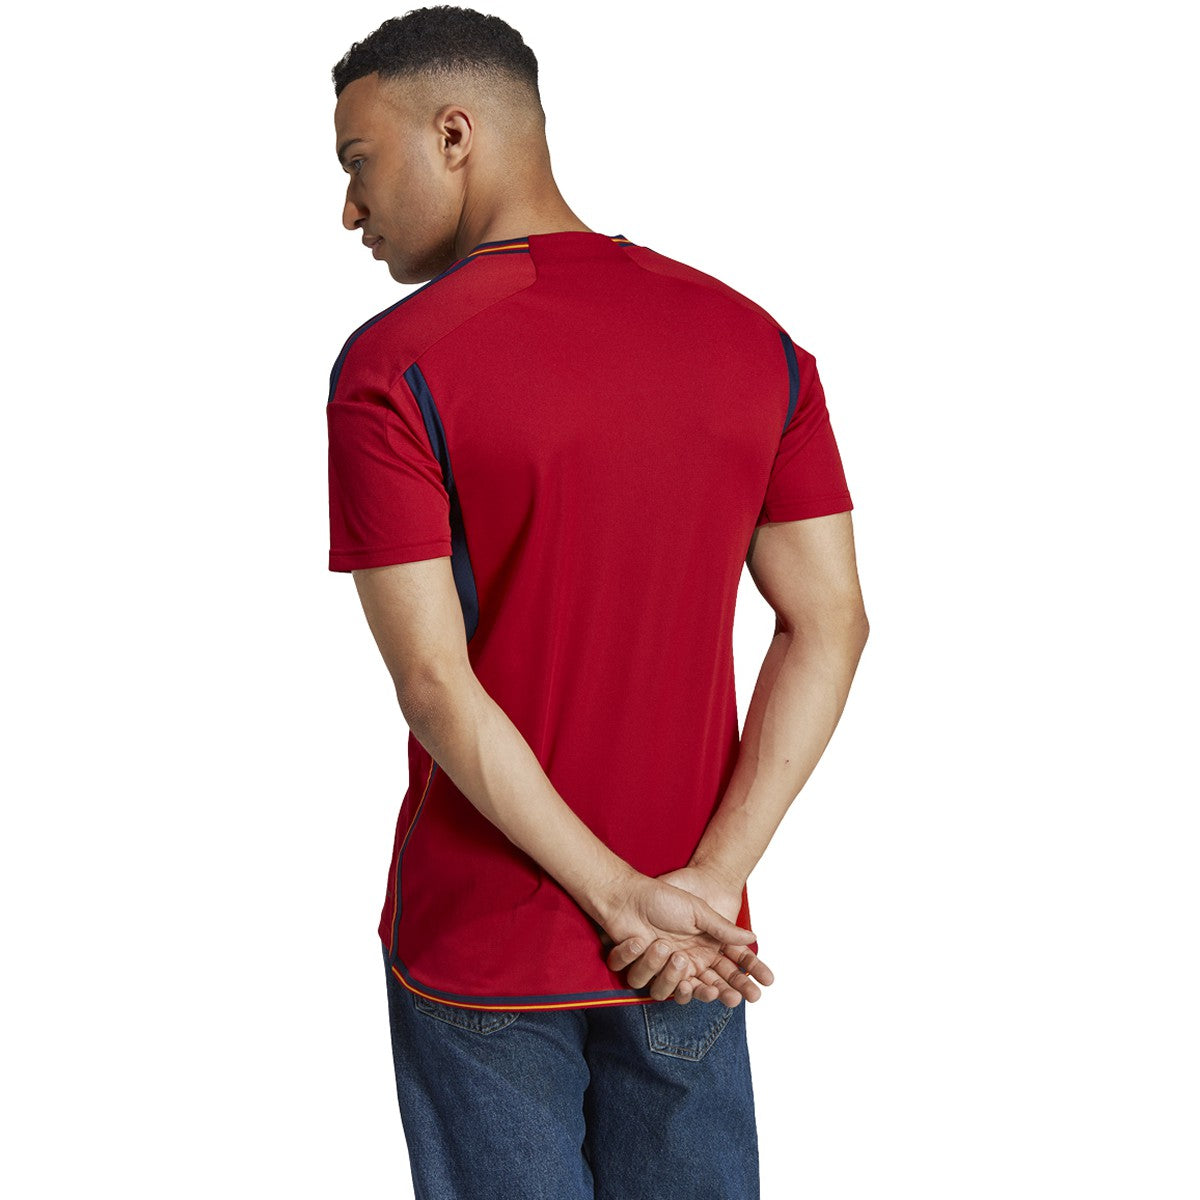 Adidas Men's Shirt - Red - XL